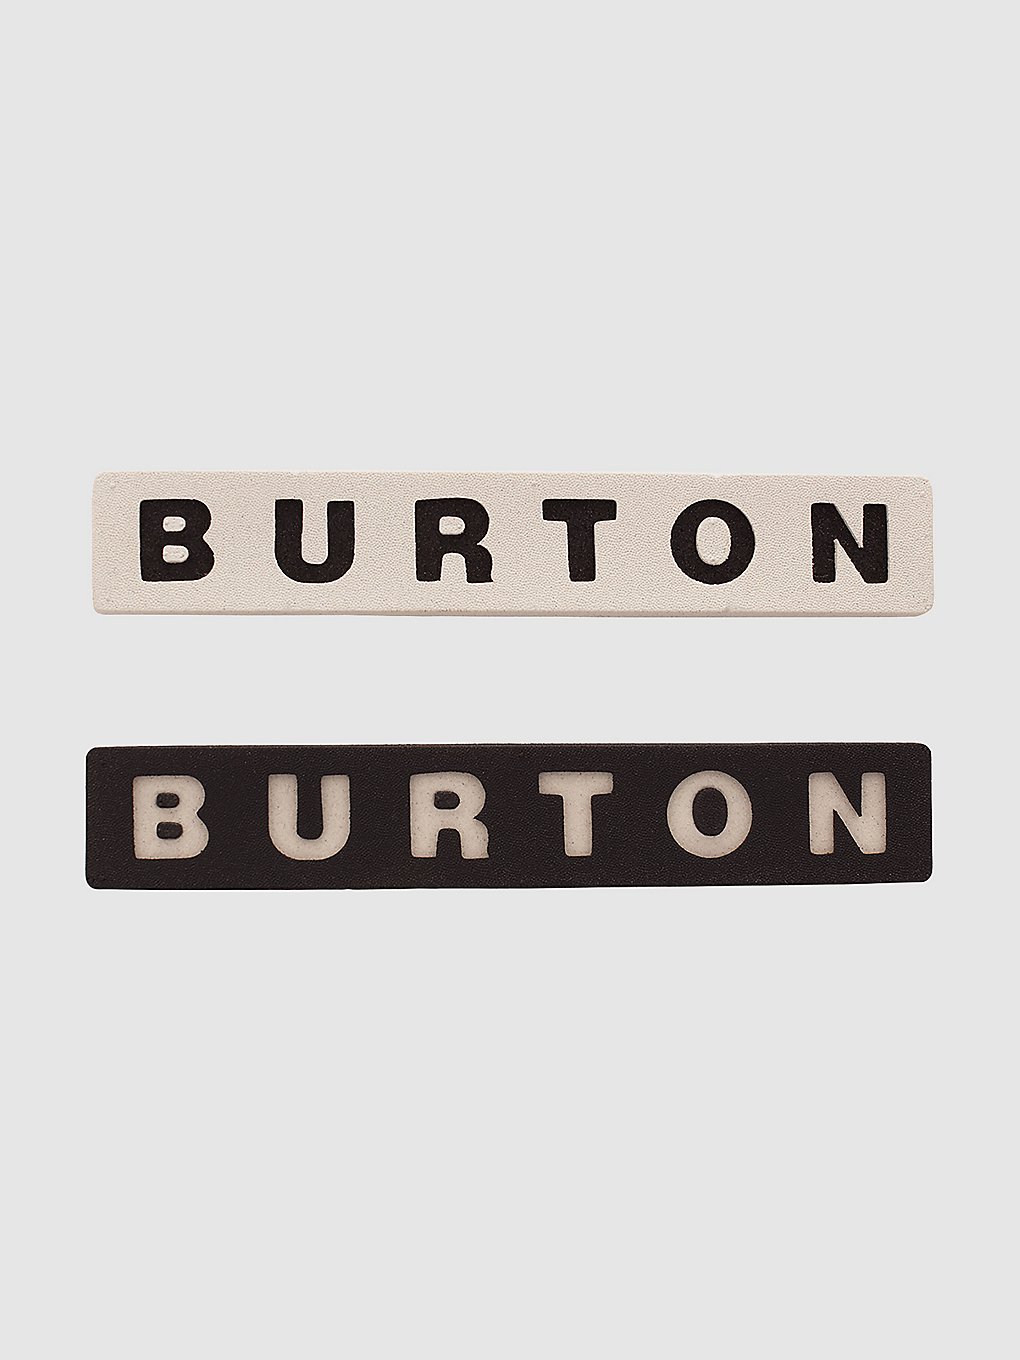 Burton Foam Mat Stomp Pad bar logo kaufen